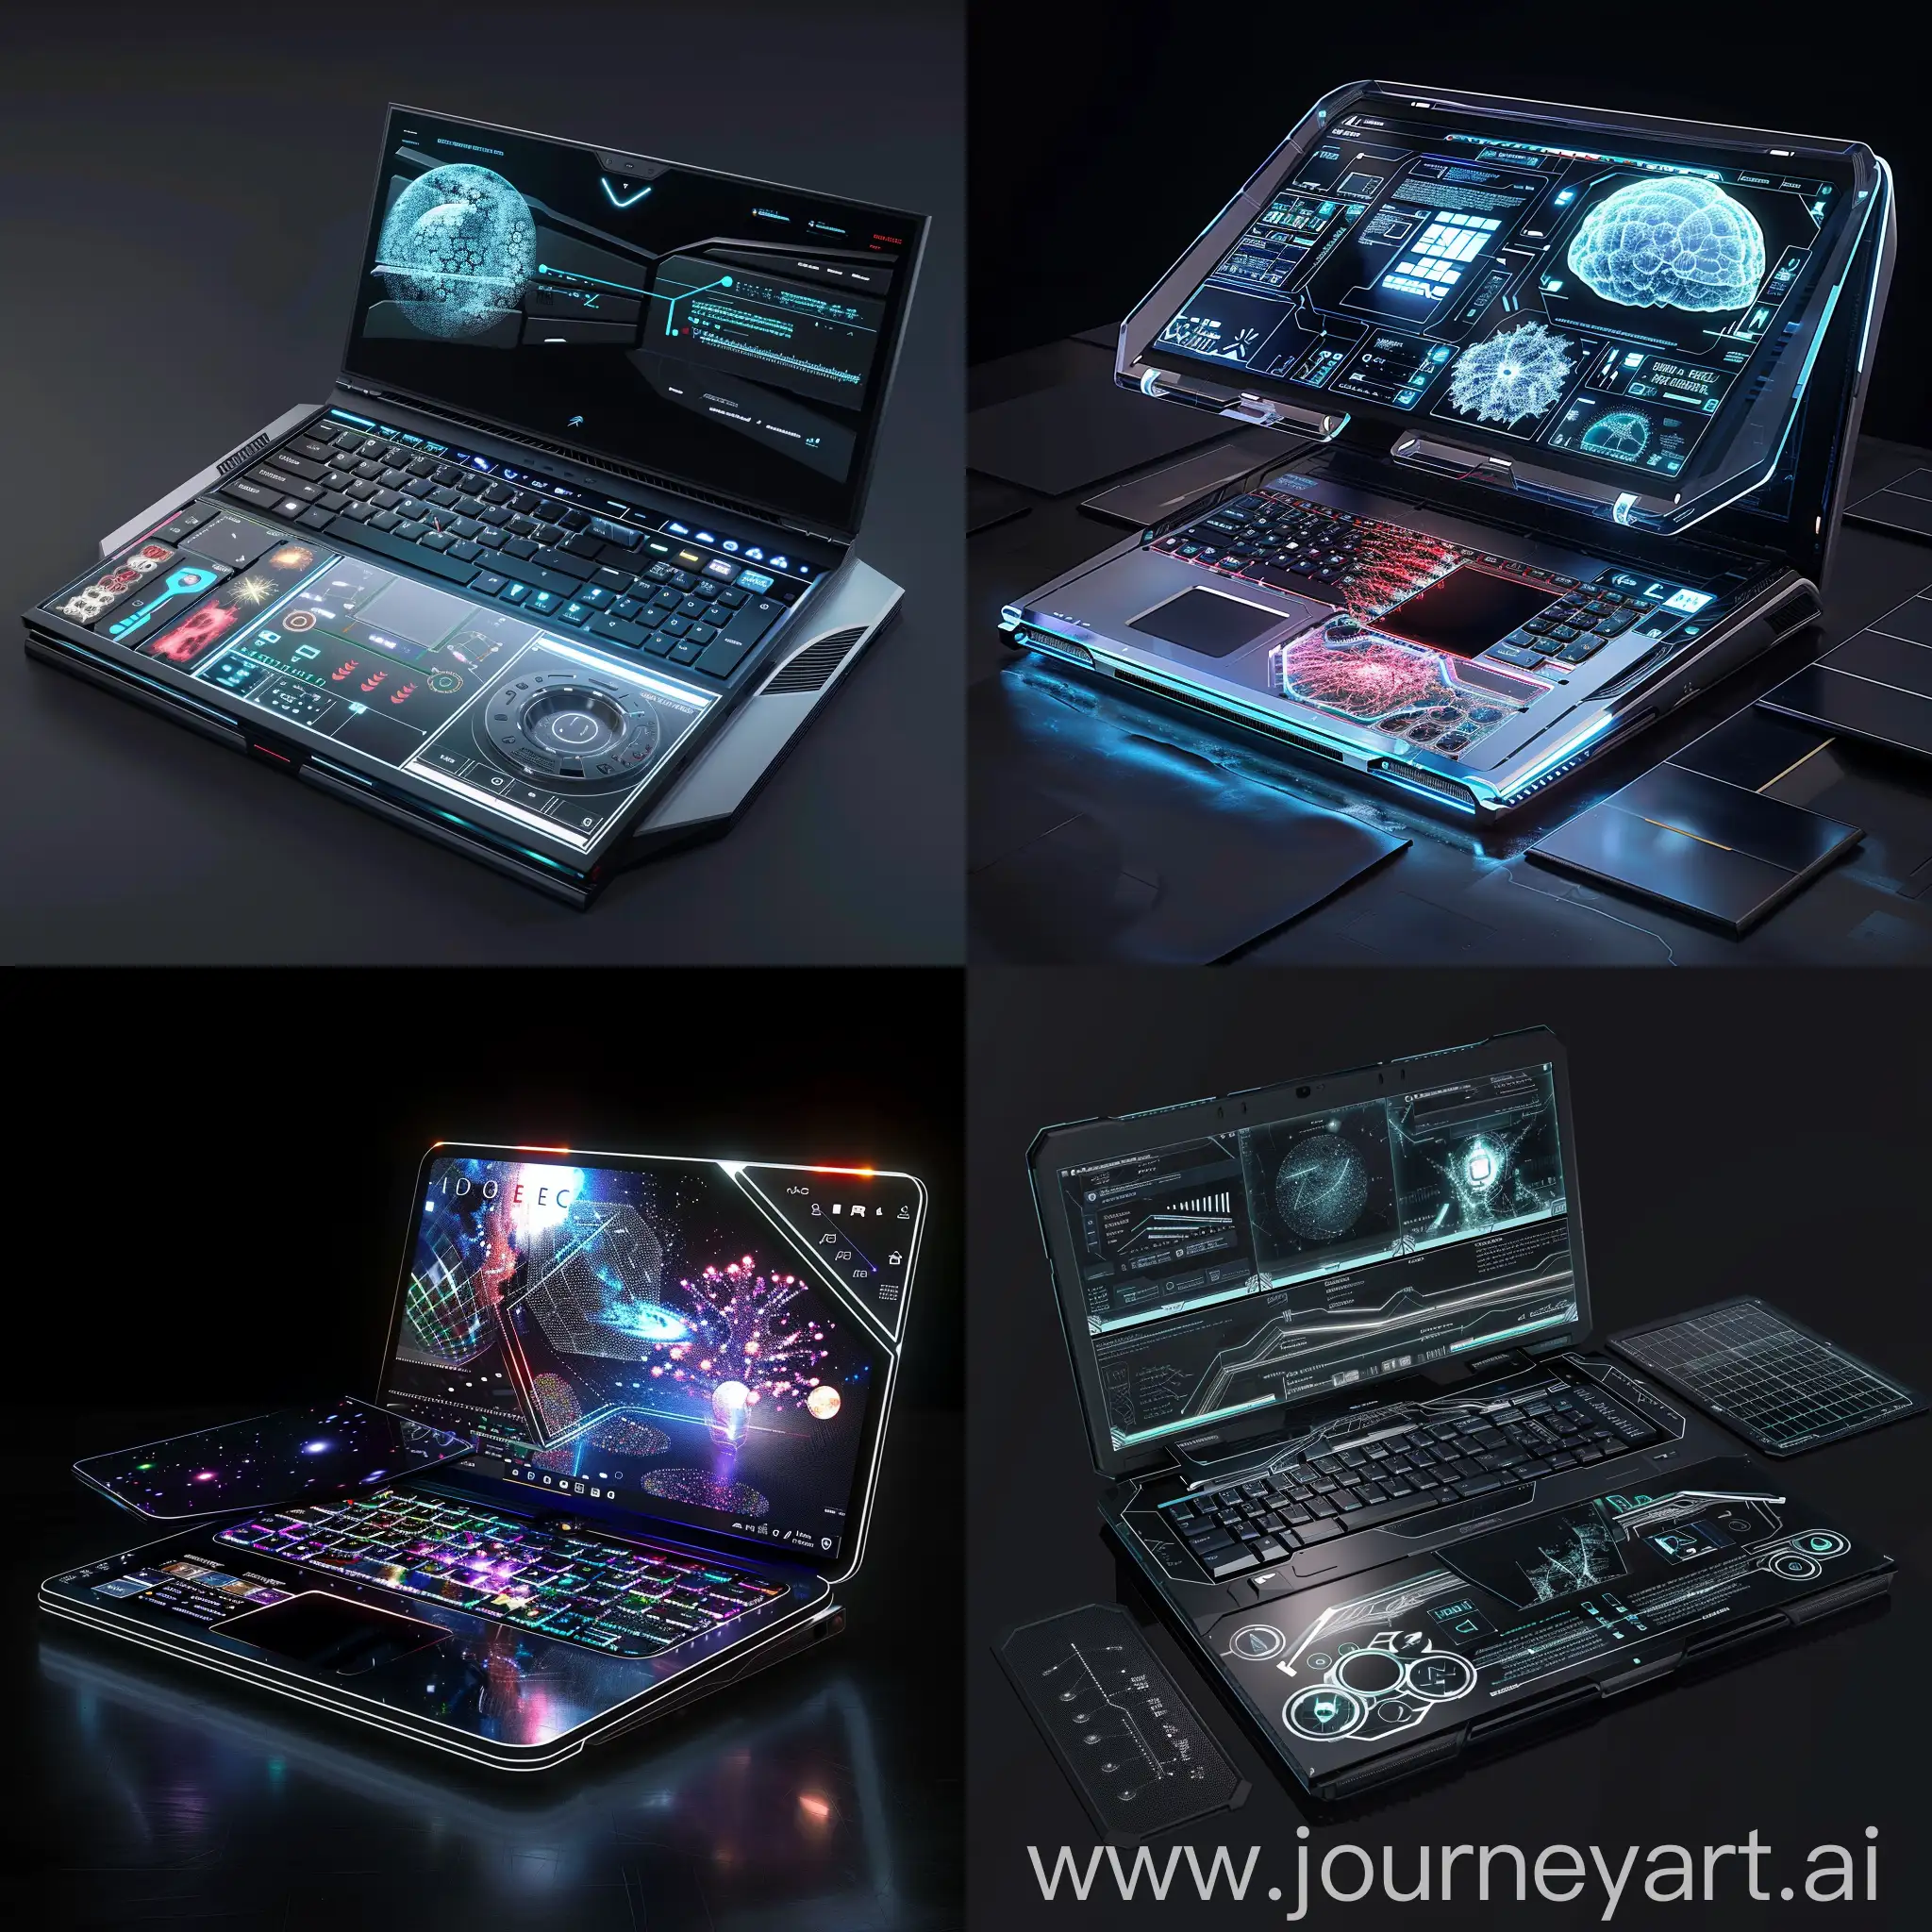 Futuristic-Quantum-Processor-Laptop-with-Holographic-Display-and-Adaptive-Design